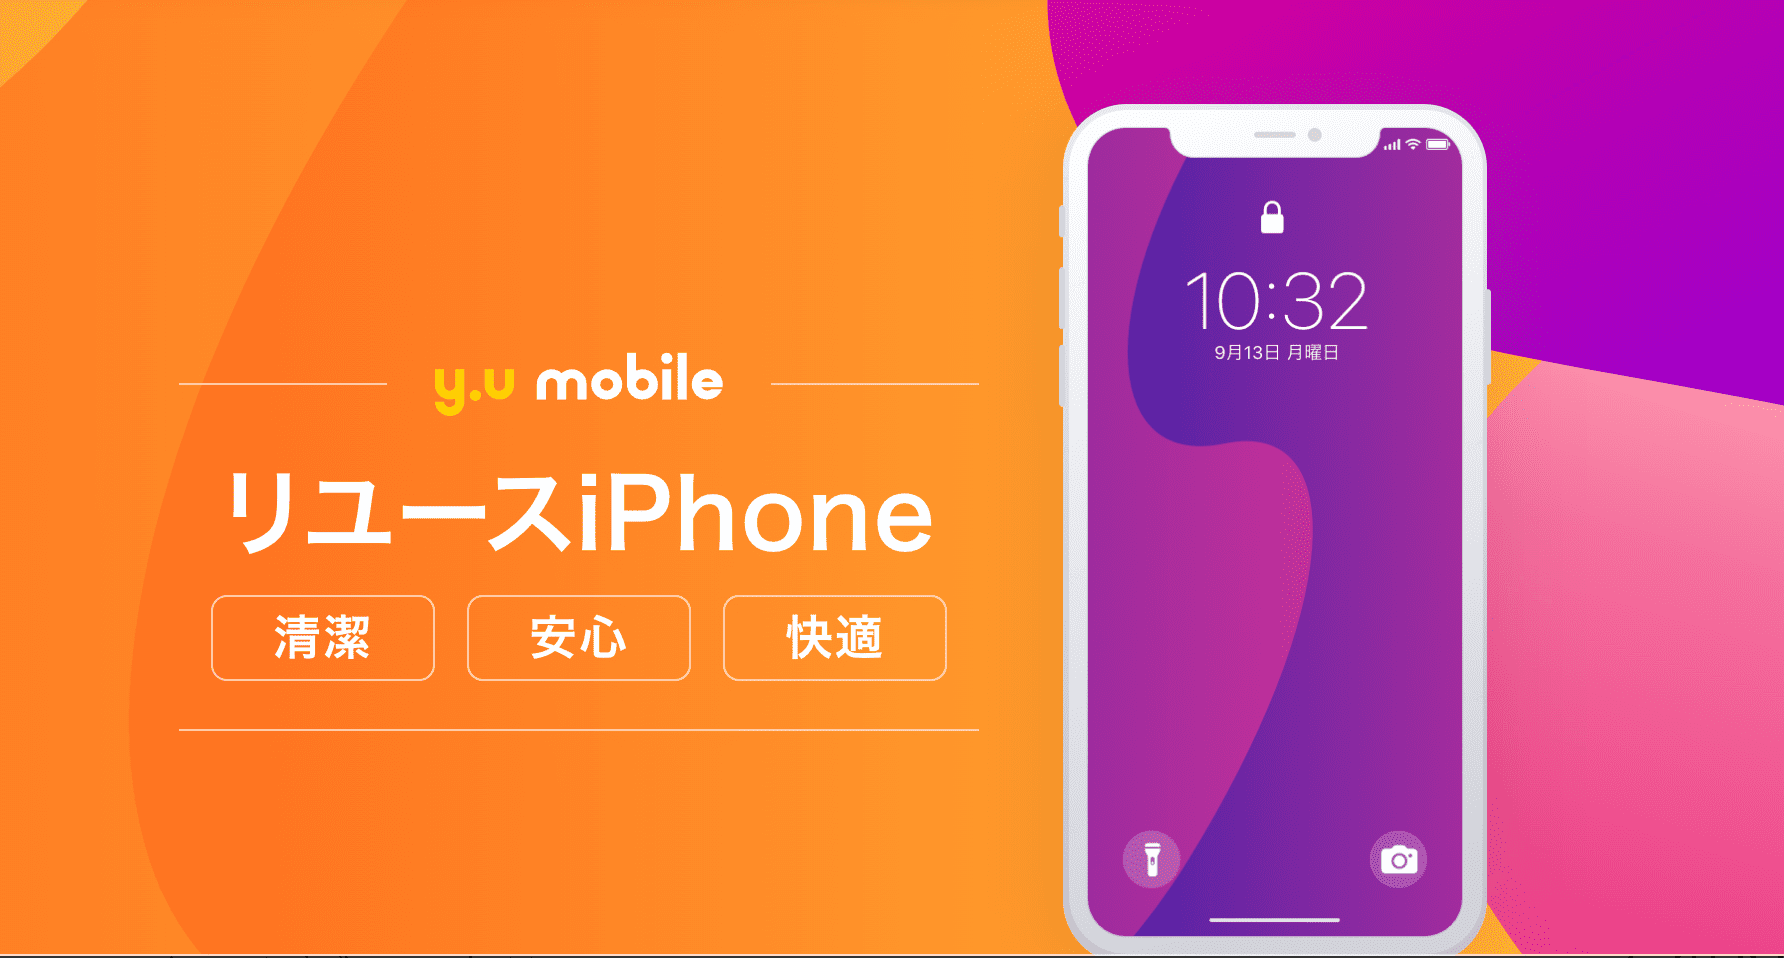 y.u mobile公式サイト